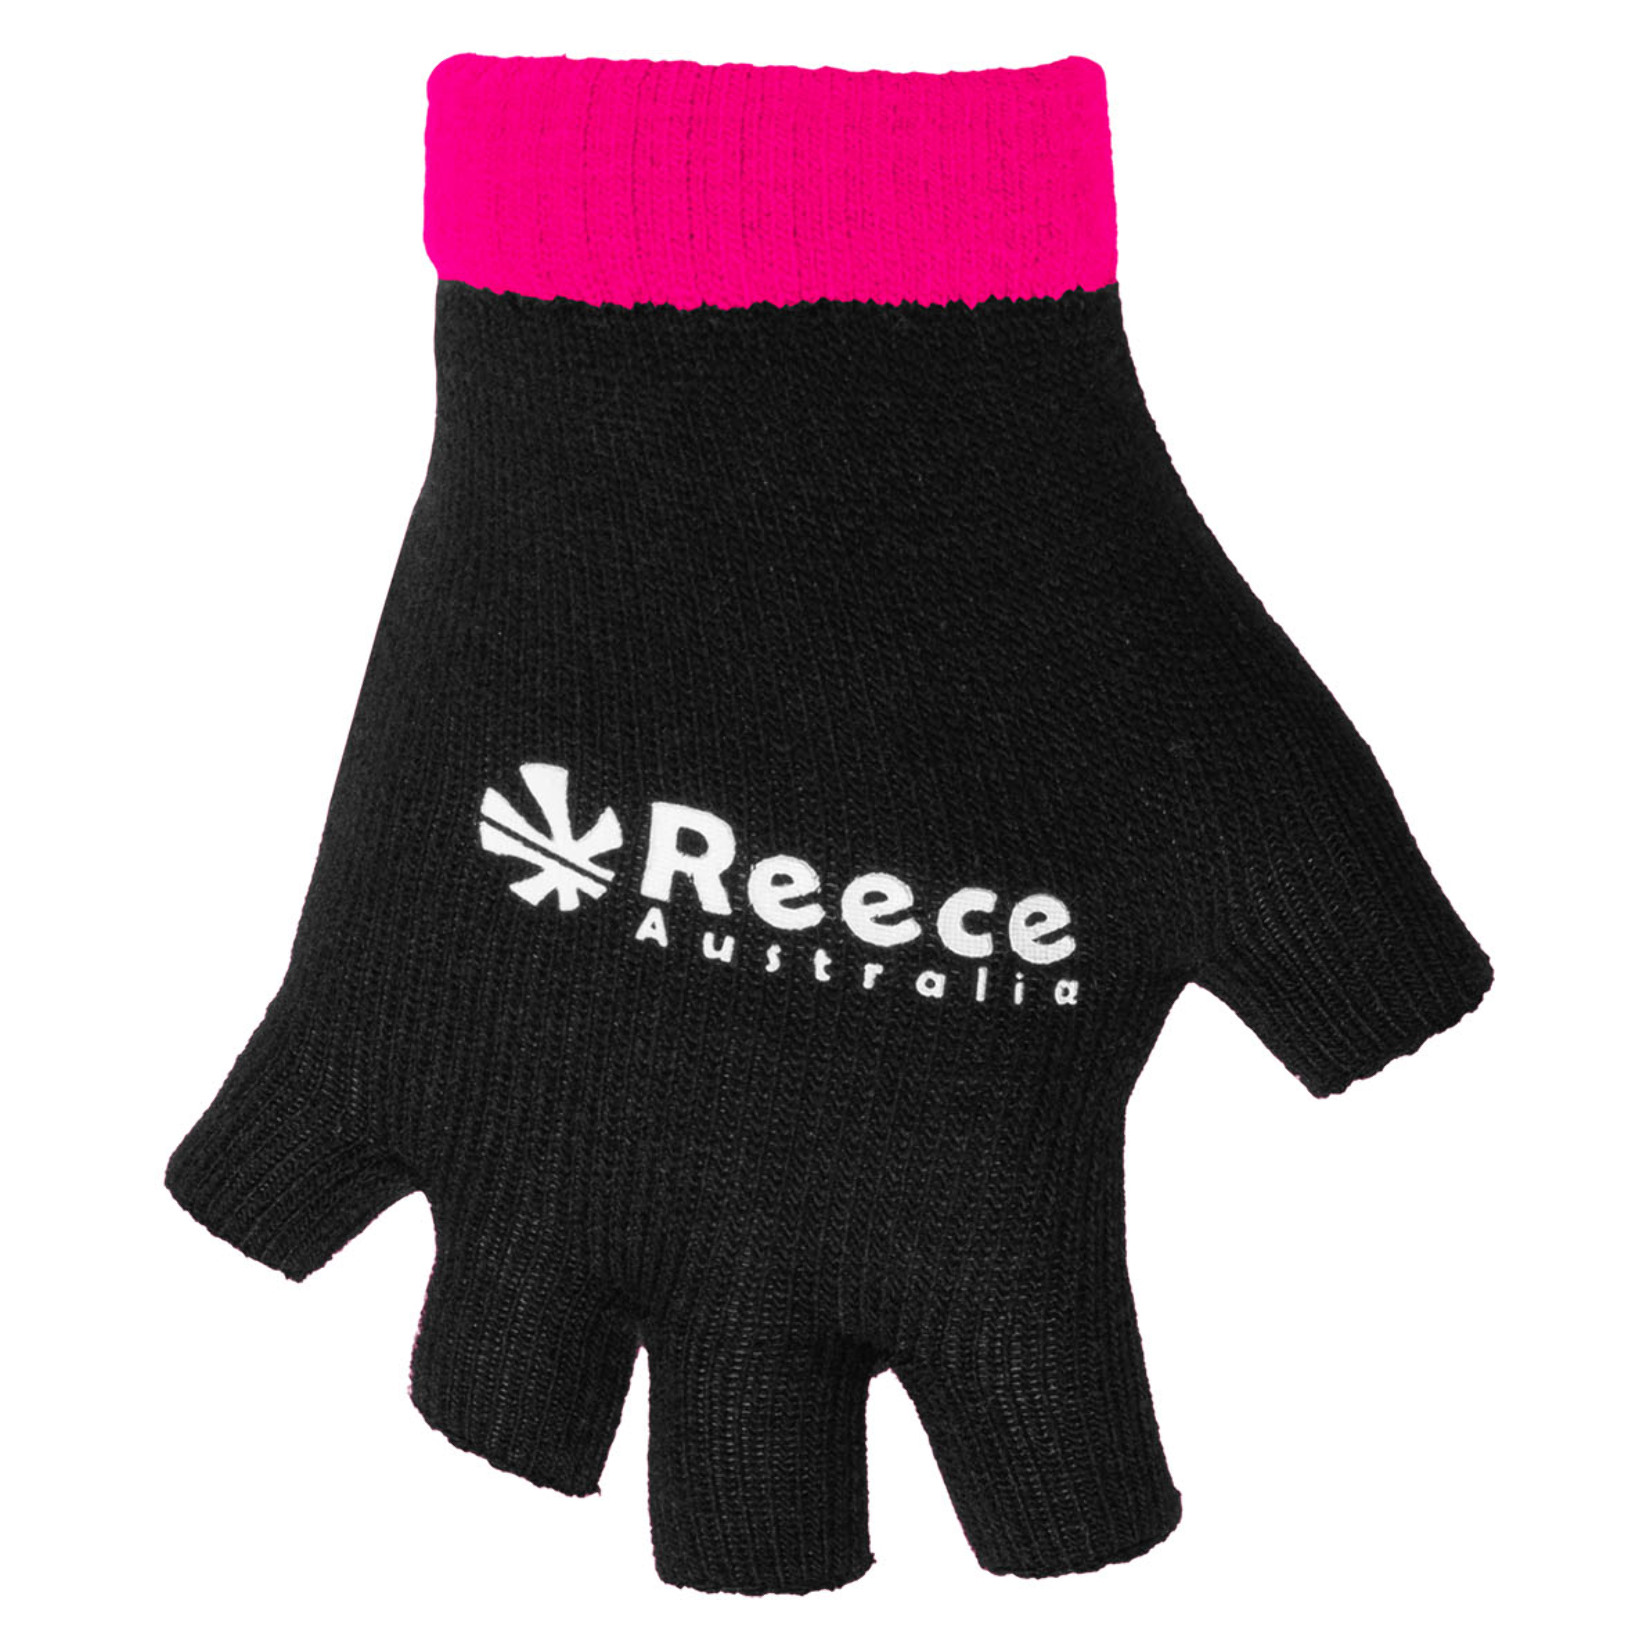 Reece Knitted Ultra Grip Glove 2 in 1